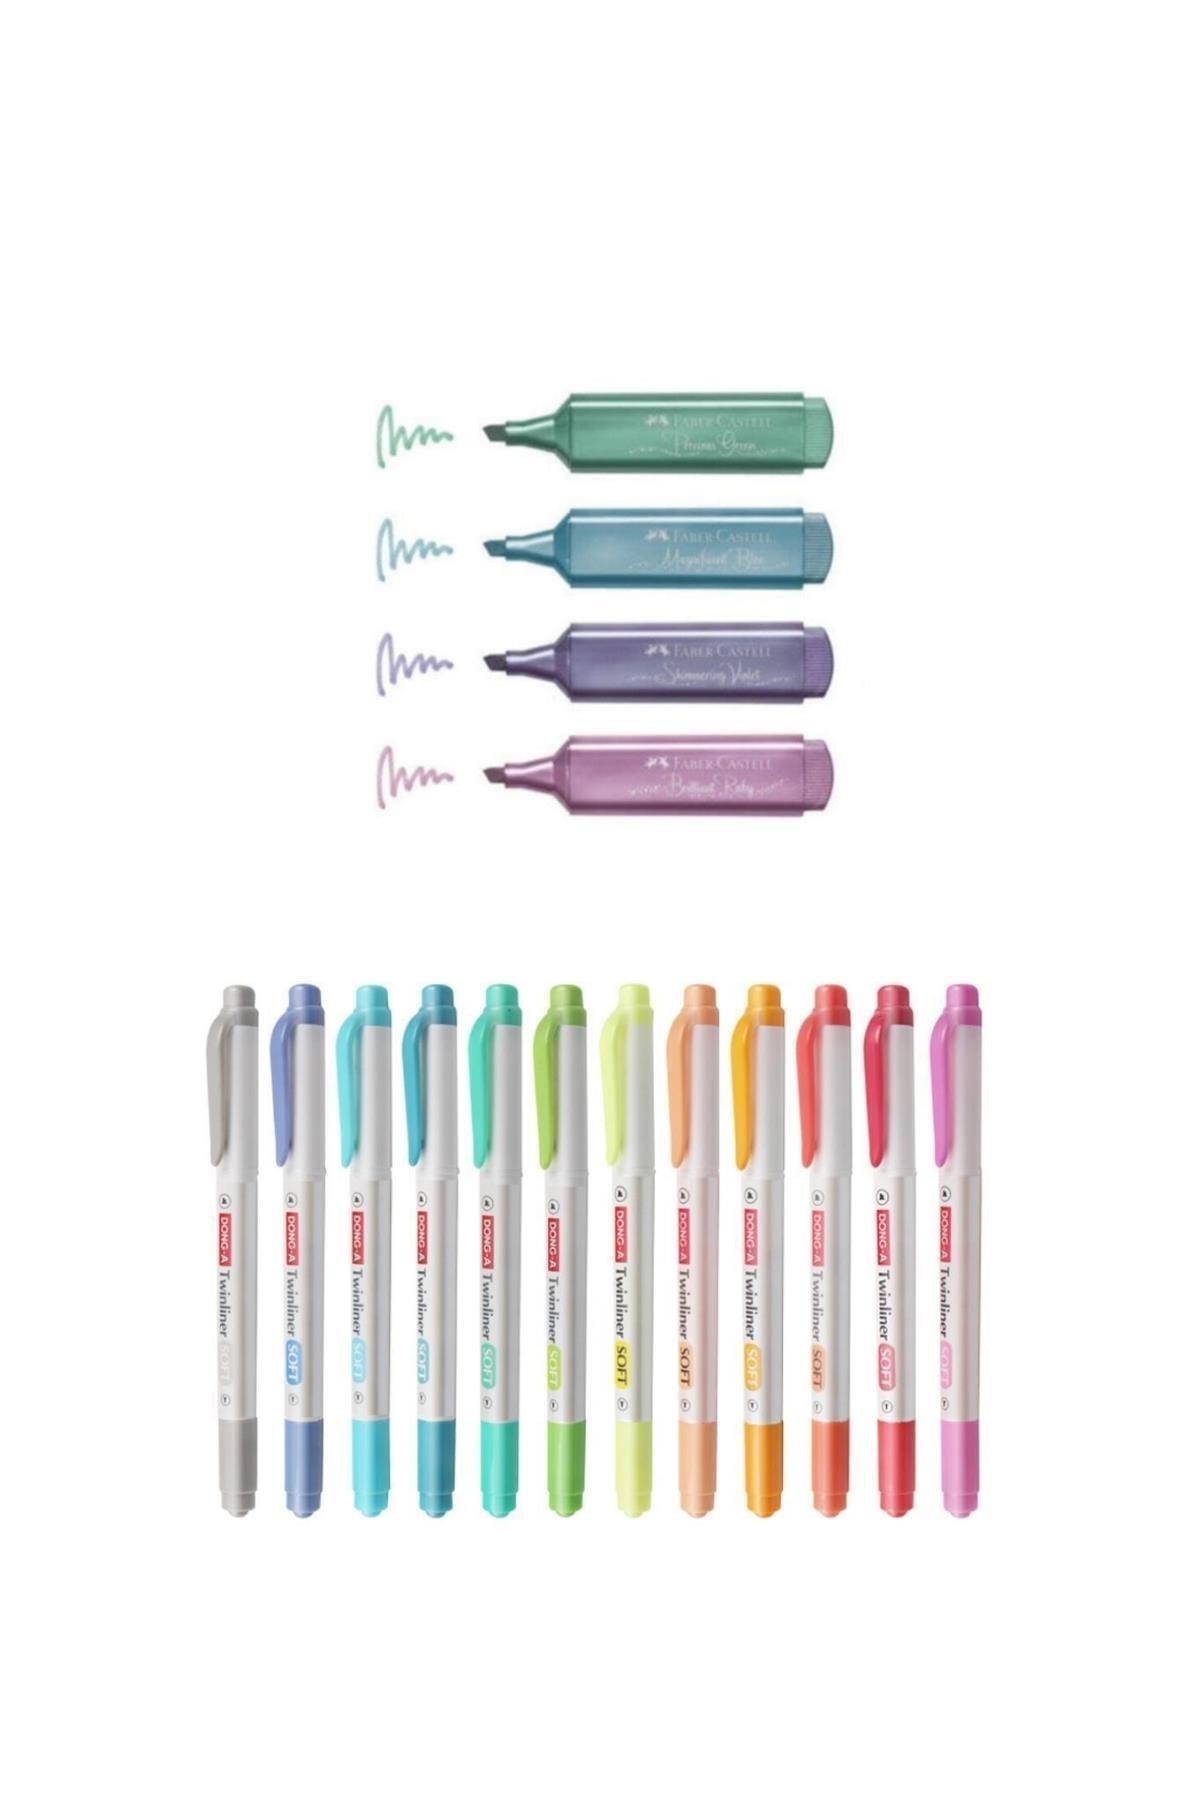 Faber Castell Metalik Işaretleme Kalemi 2021 4 Yeni Renk Ve Dong-a Twinliner Soft 12 Renk Fosforlu Set